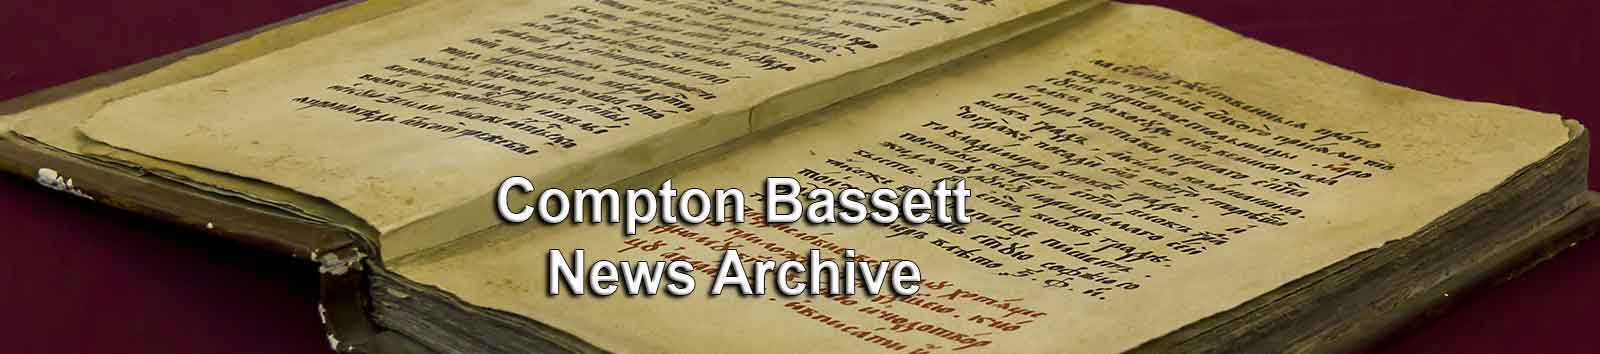 Compton Bassett News Archive